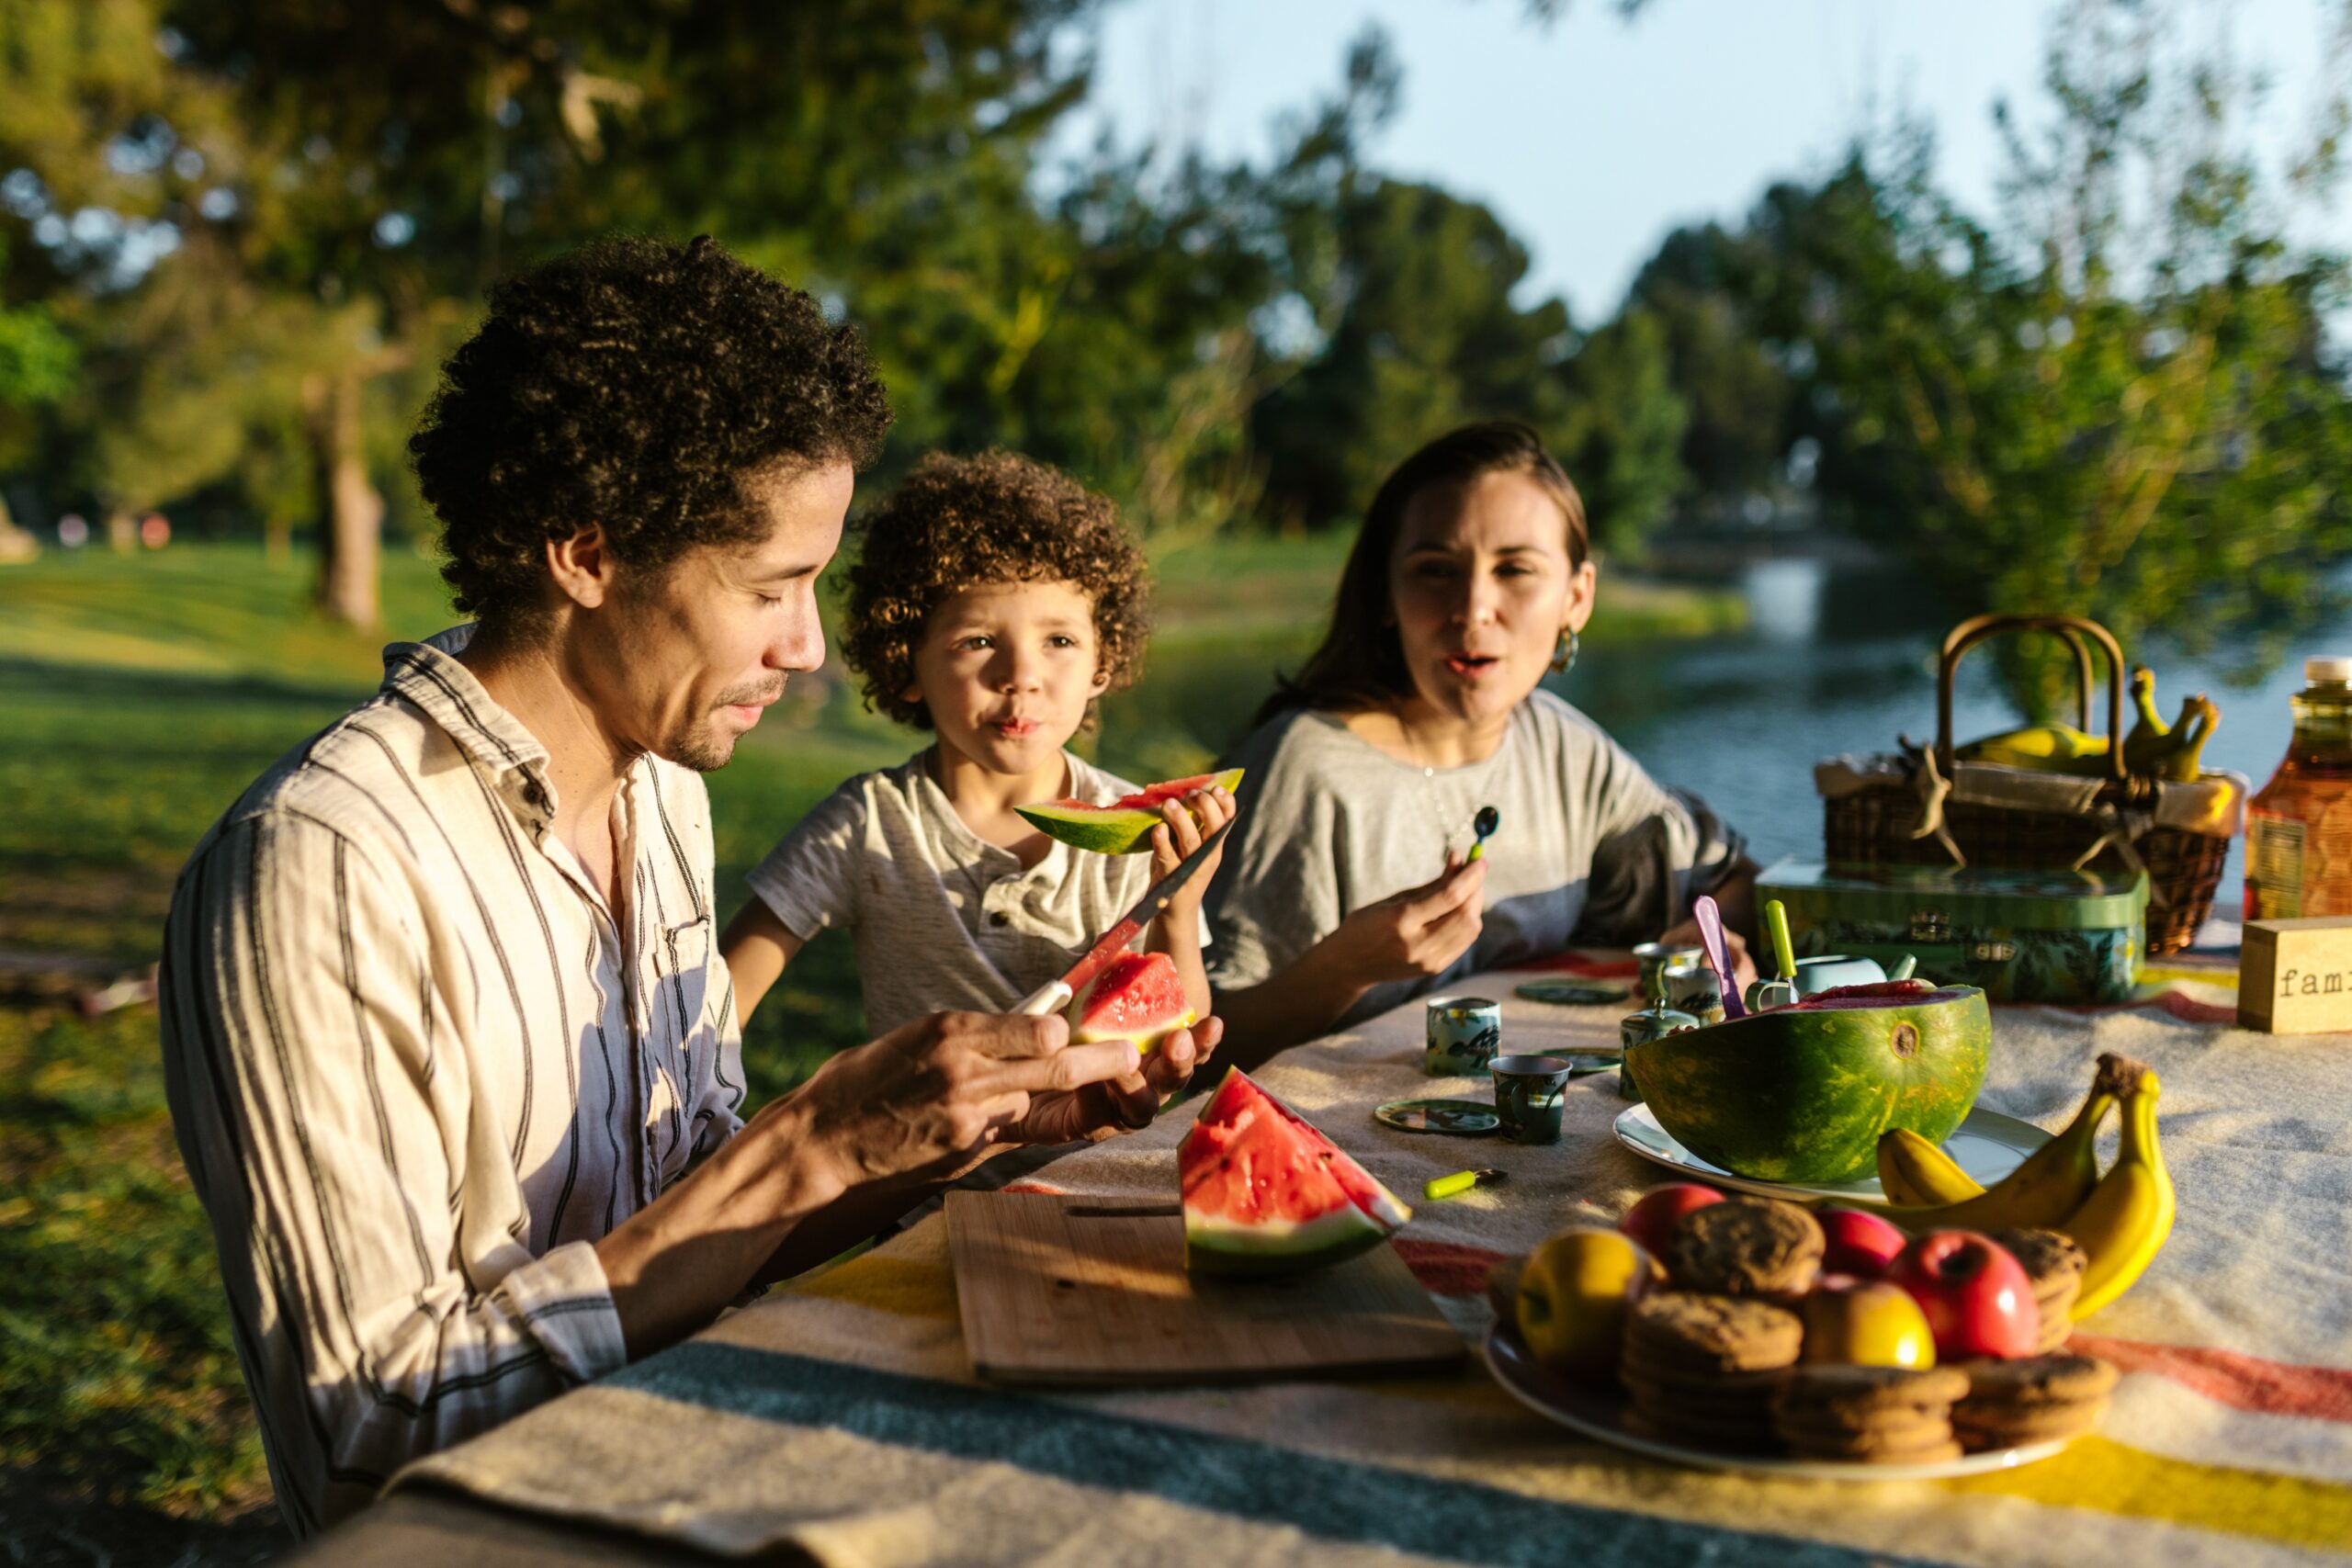 Family eating watermelon at a picnic